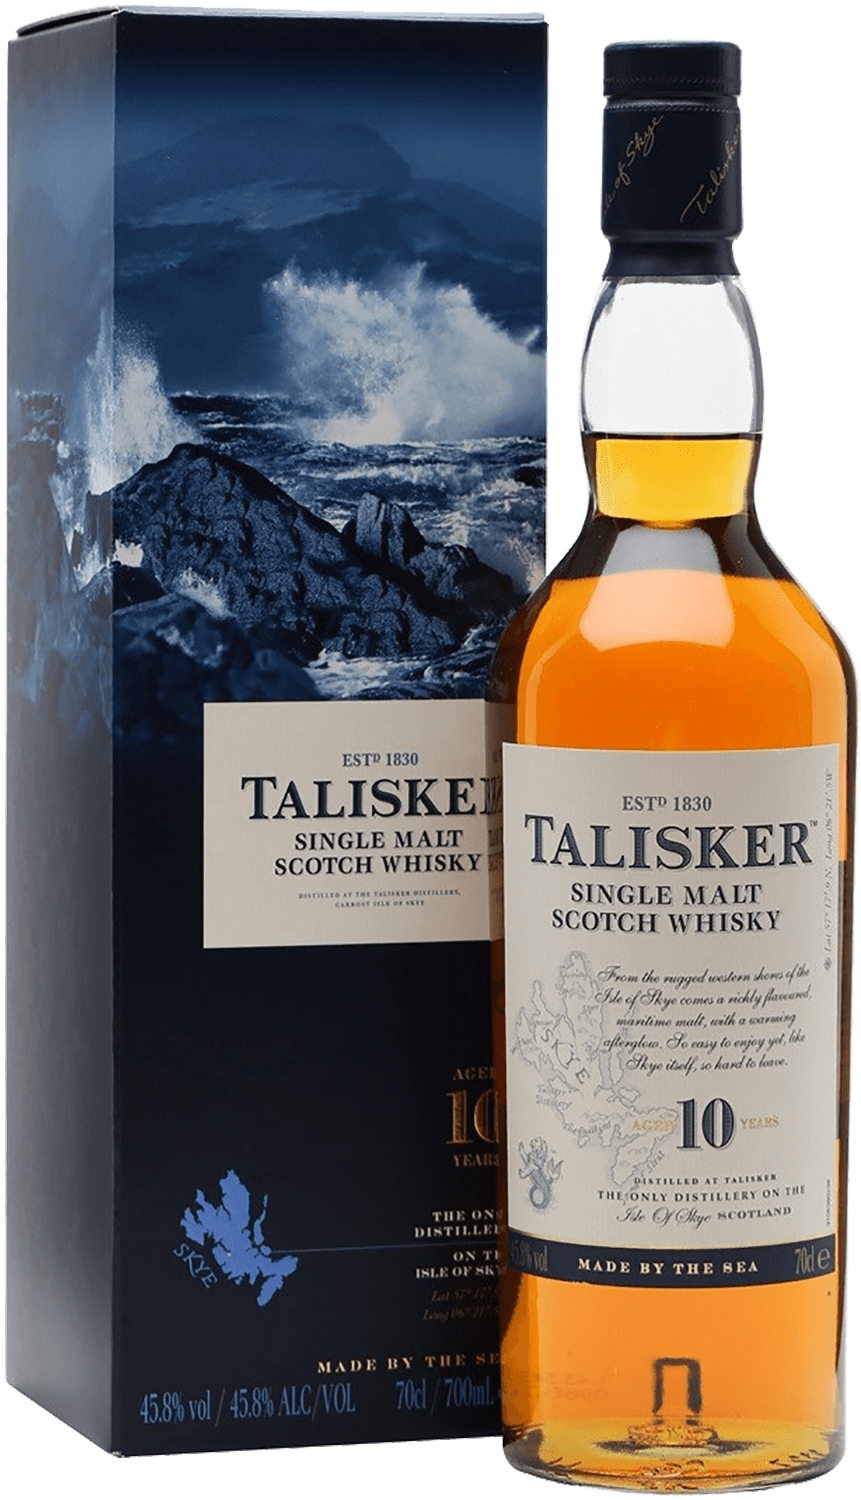 Talisker 10 years single malt scotch whisky (gift box) fettercairn single malt scotch whisky 22 years old gift box